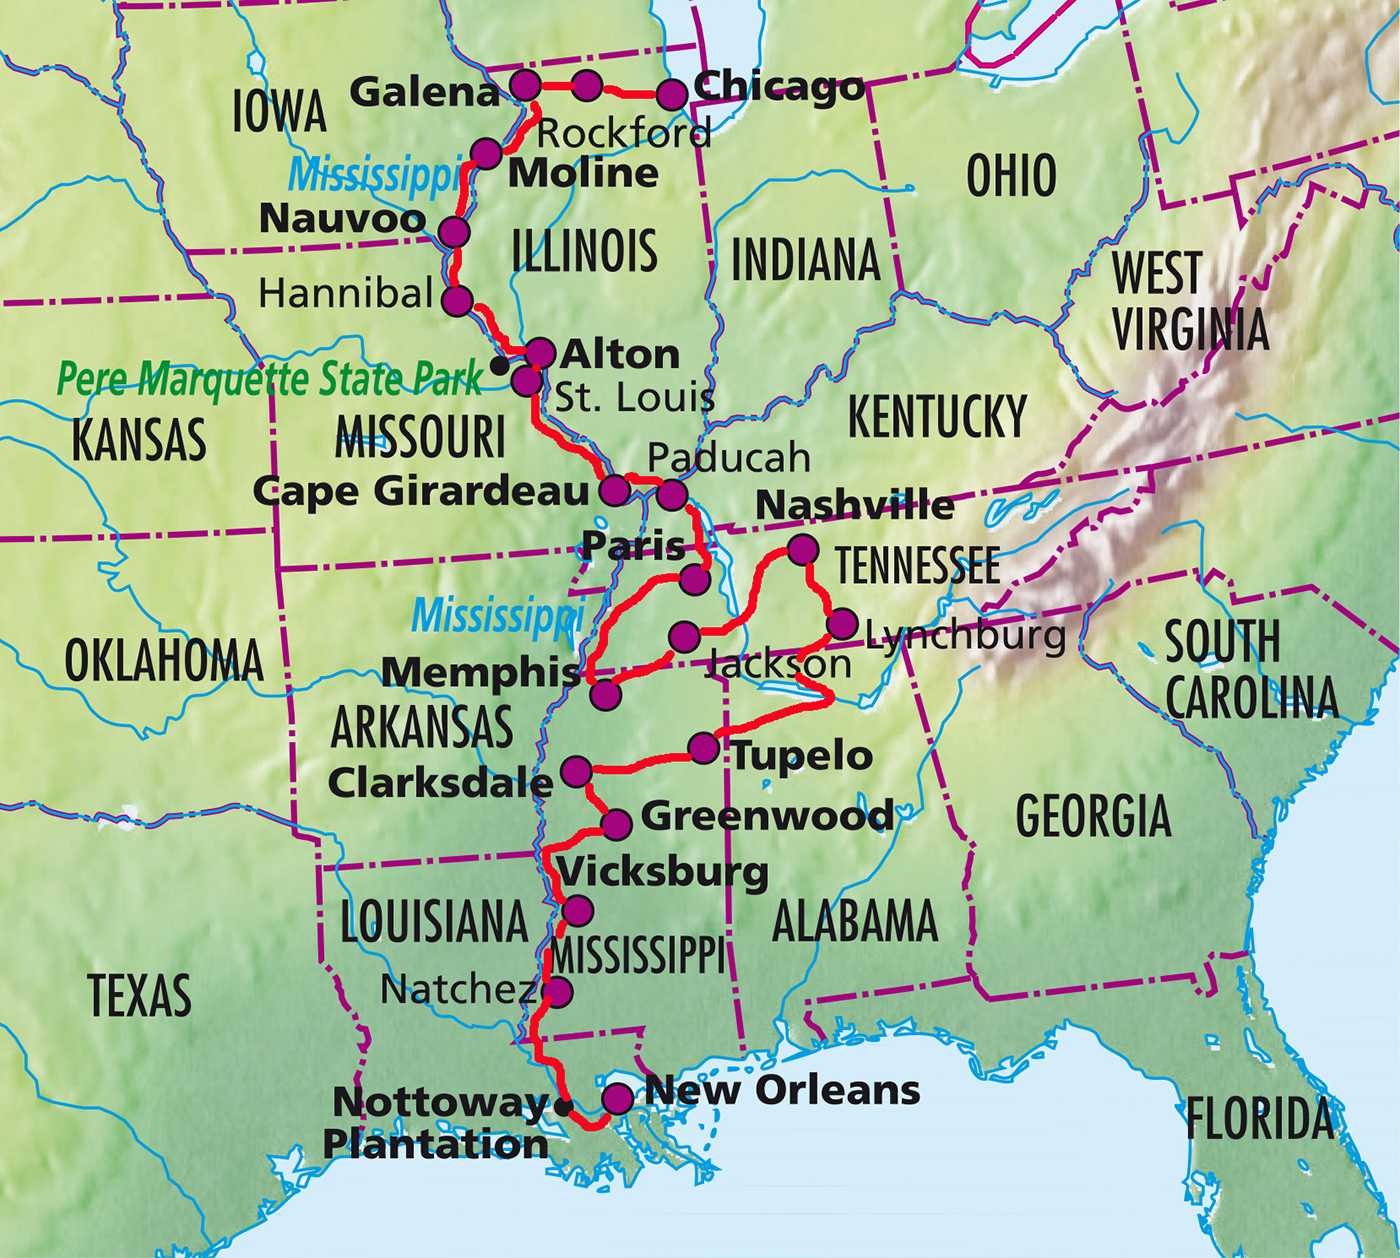 Миссисипи приток миссури. Река Миссисипи на карте США. Река Миссисипи и Миссури на карте. Штат Миссисипи на карте Америки. Штат Миссисипи на карте США.